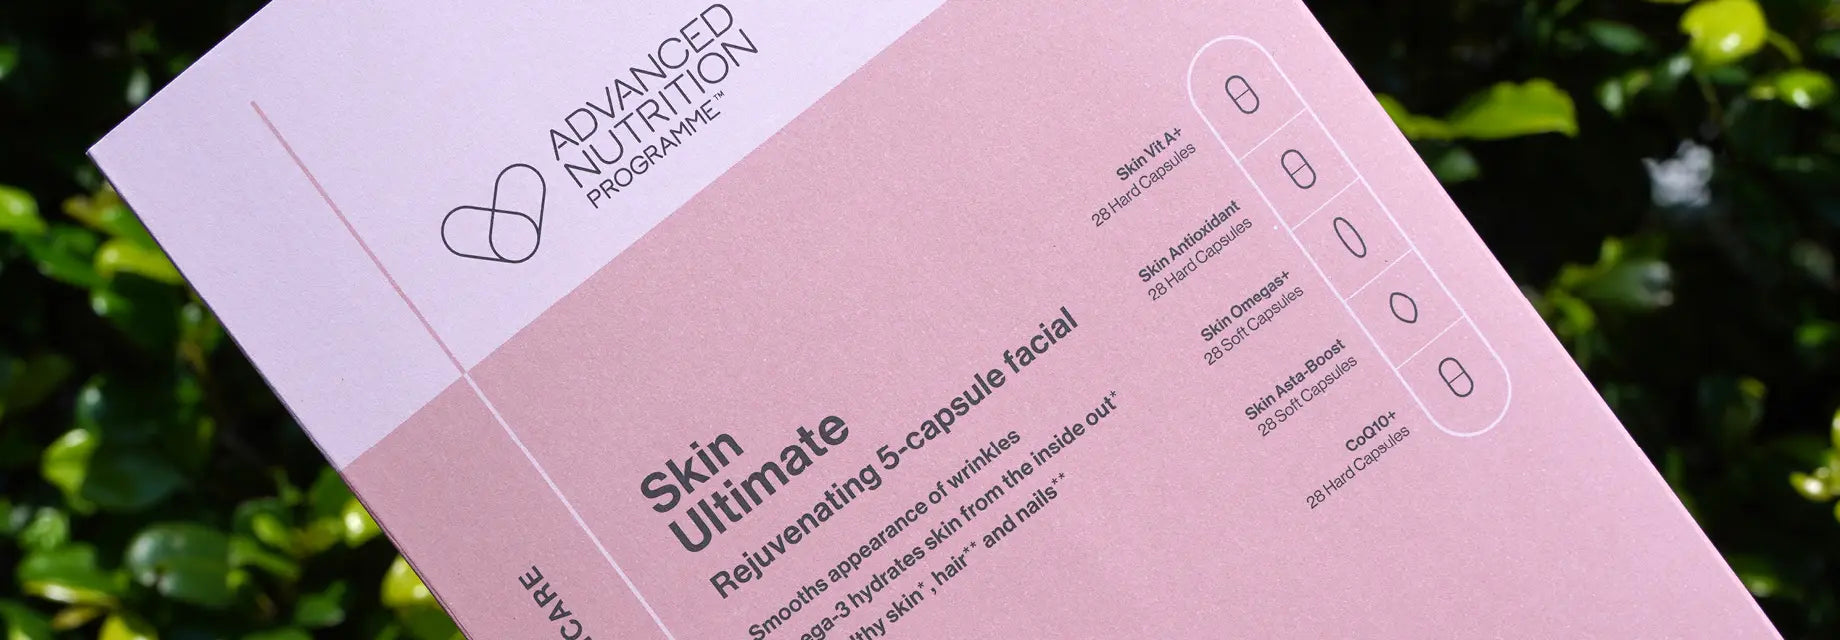 Autumn Skin Picks - Skin Utlimate - Advanced Nutrition Programme Australia